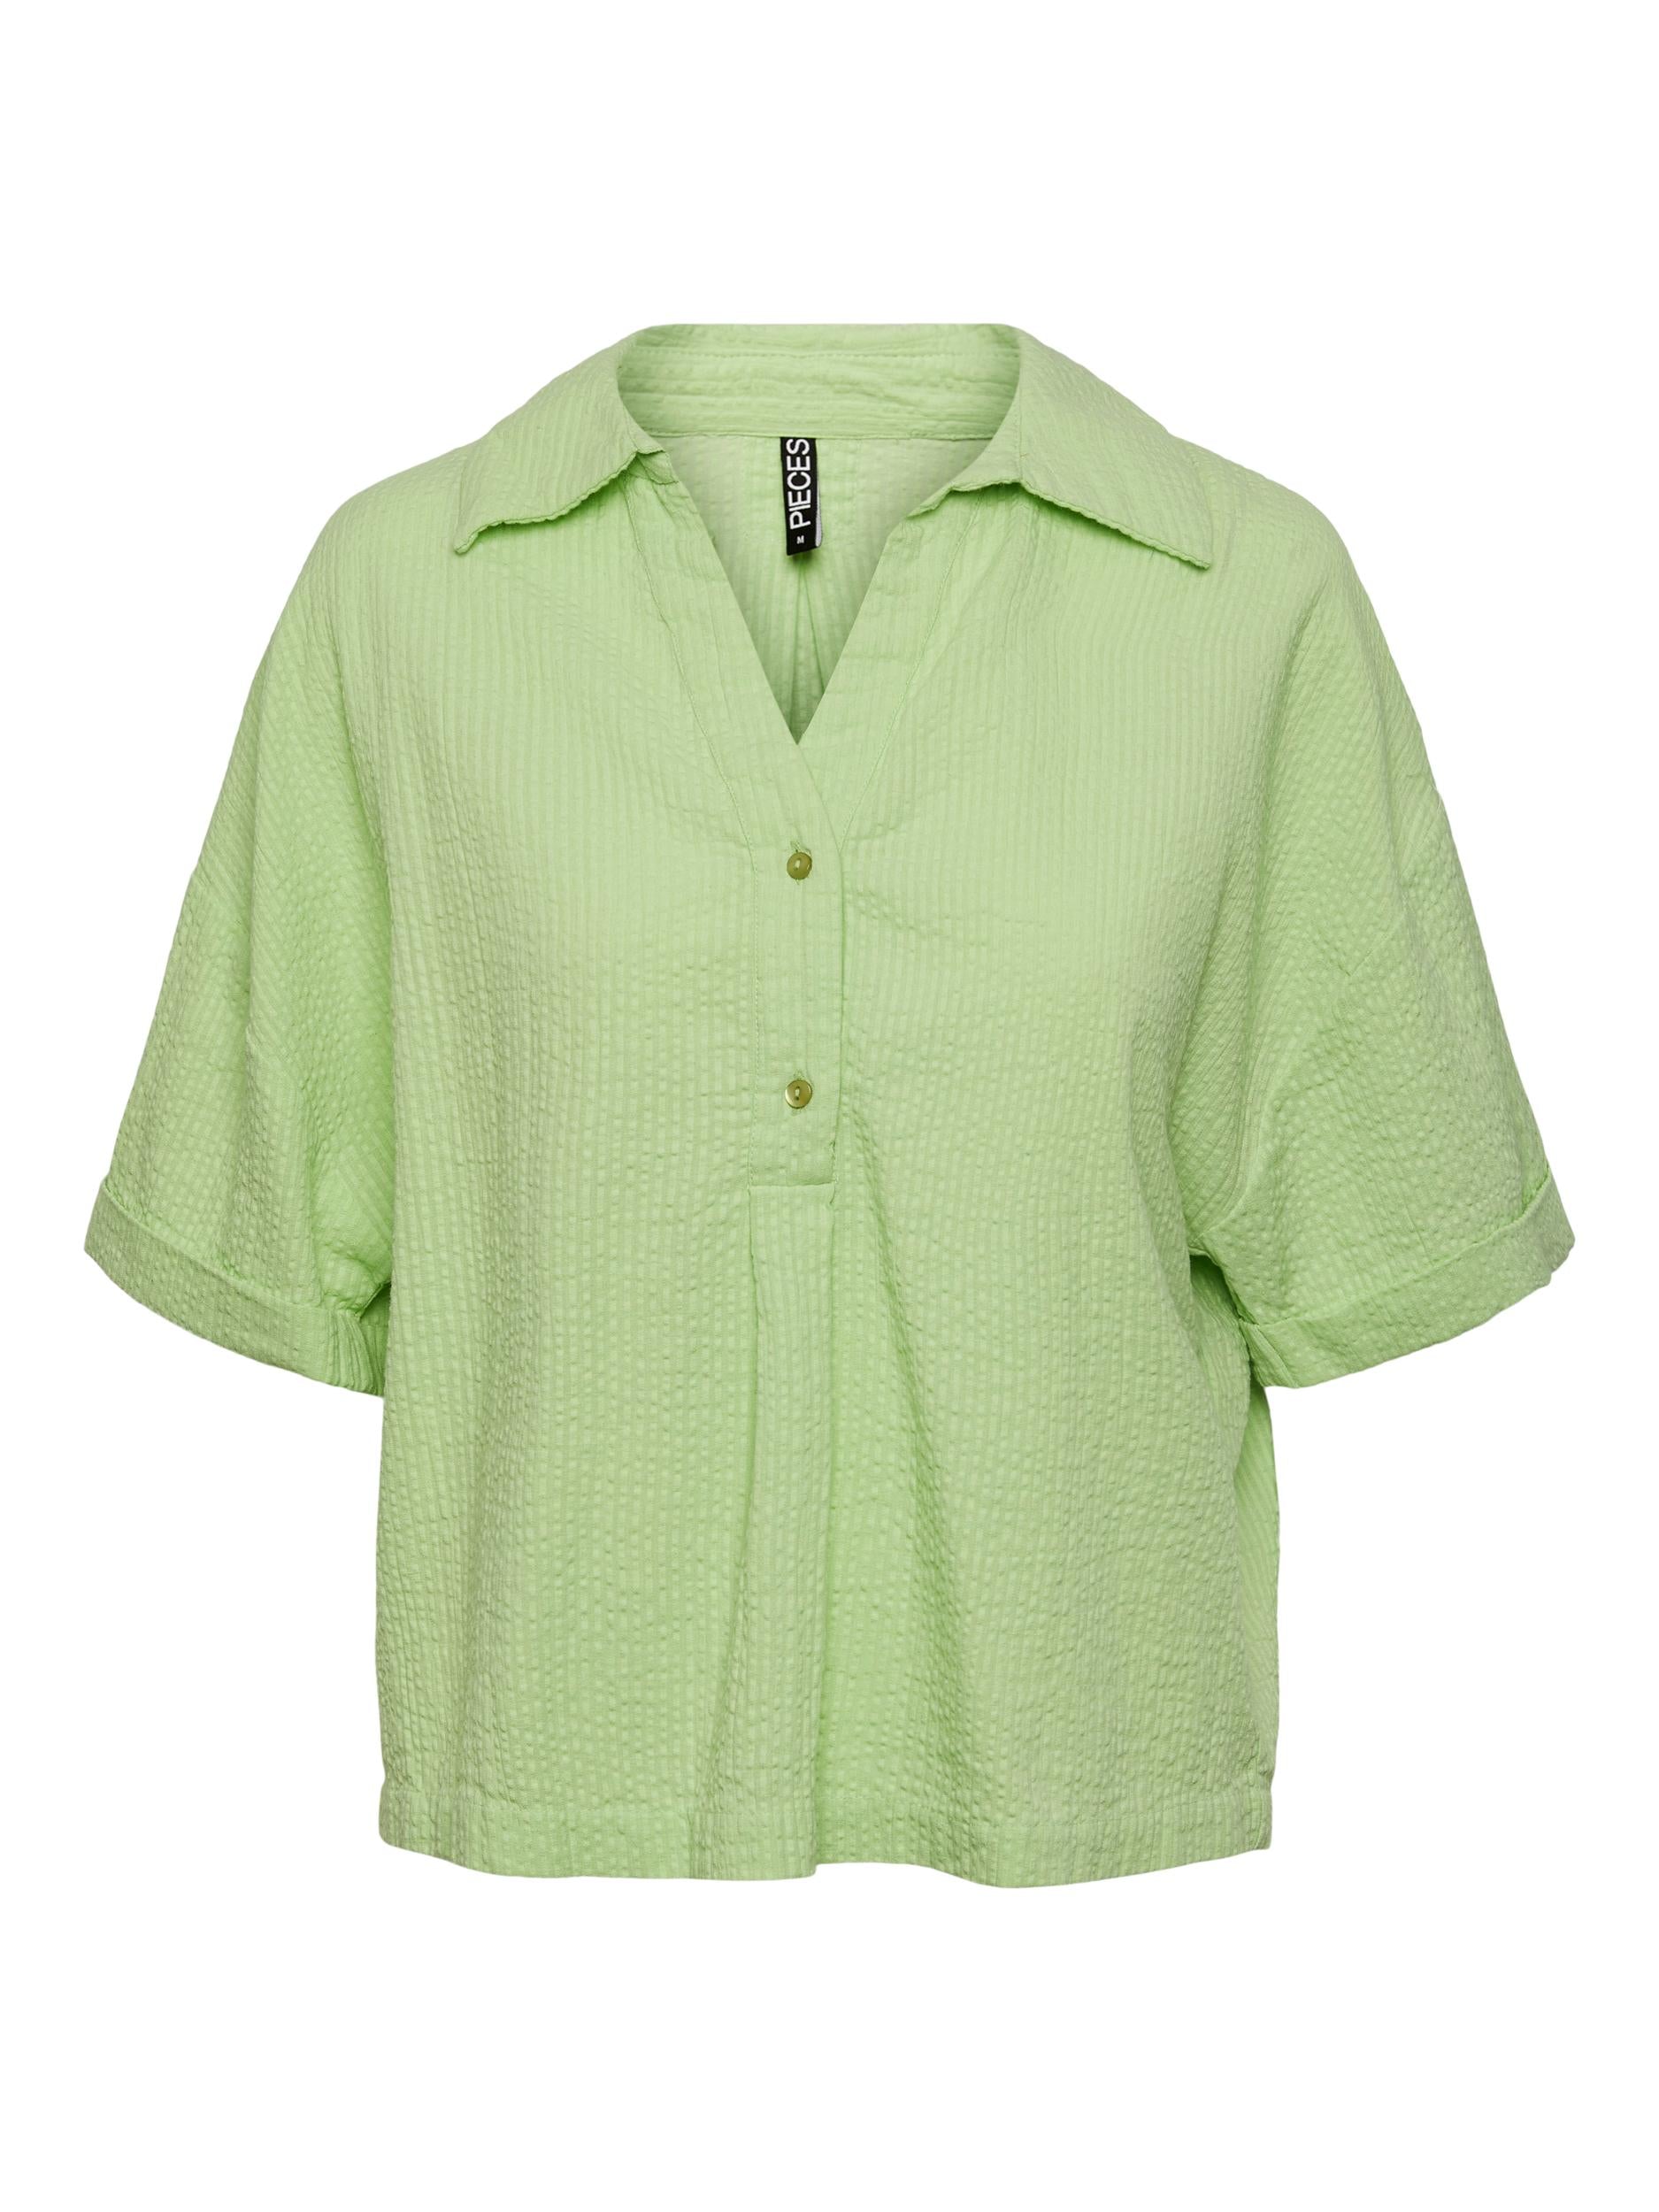 Pieces green cotton shirt